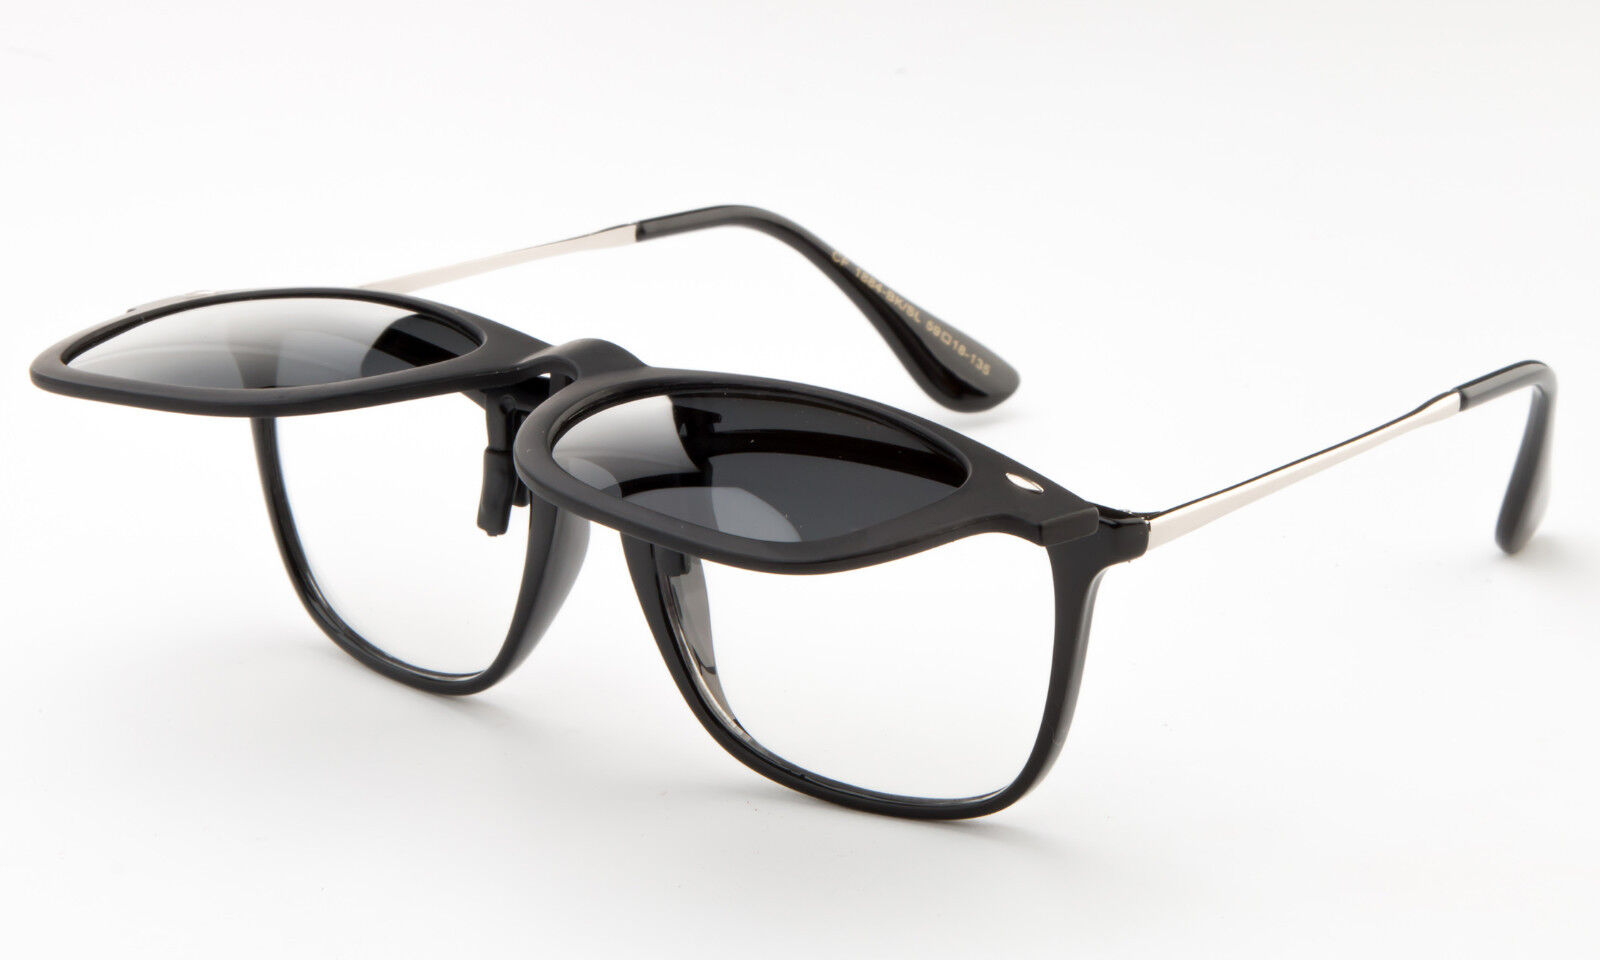 Polarized Flip Up Sunglasses Black Clip On 100% UV Protection Fishing Men Women